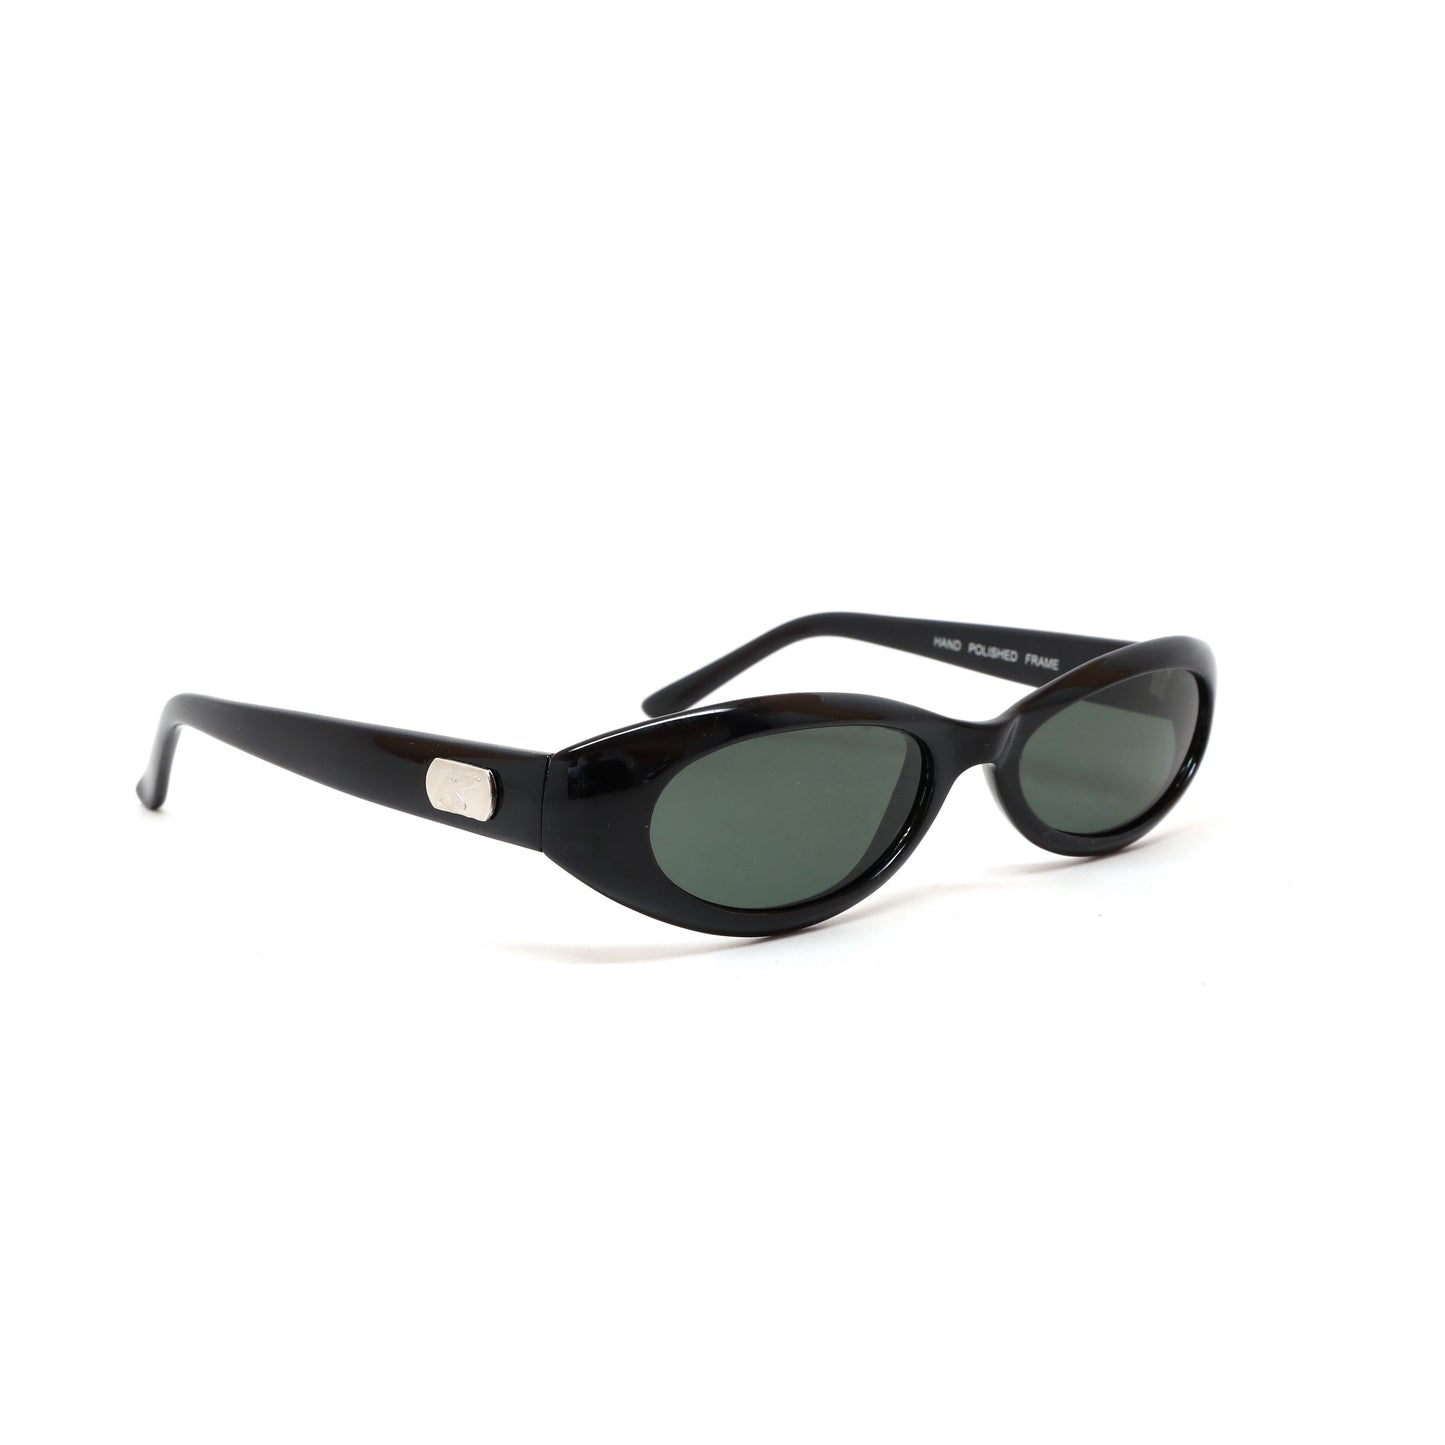 Vintage Small Size 90s Mod Verona Classic Oval Frame Sunglasses - Black